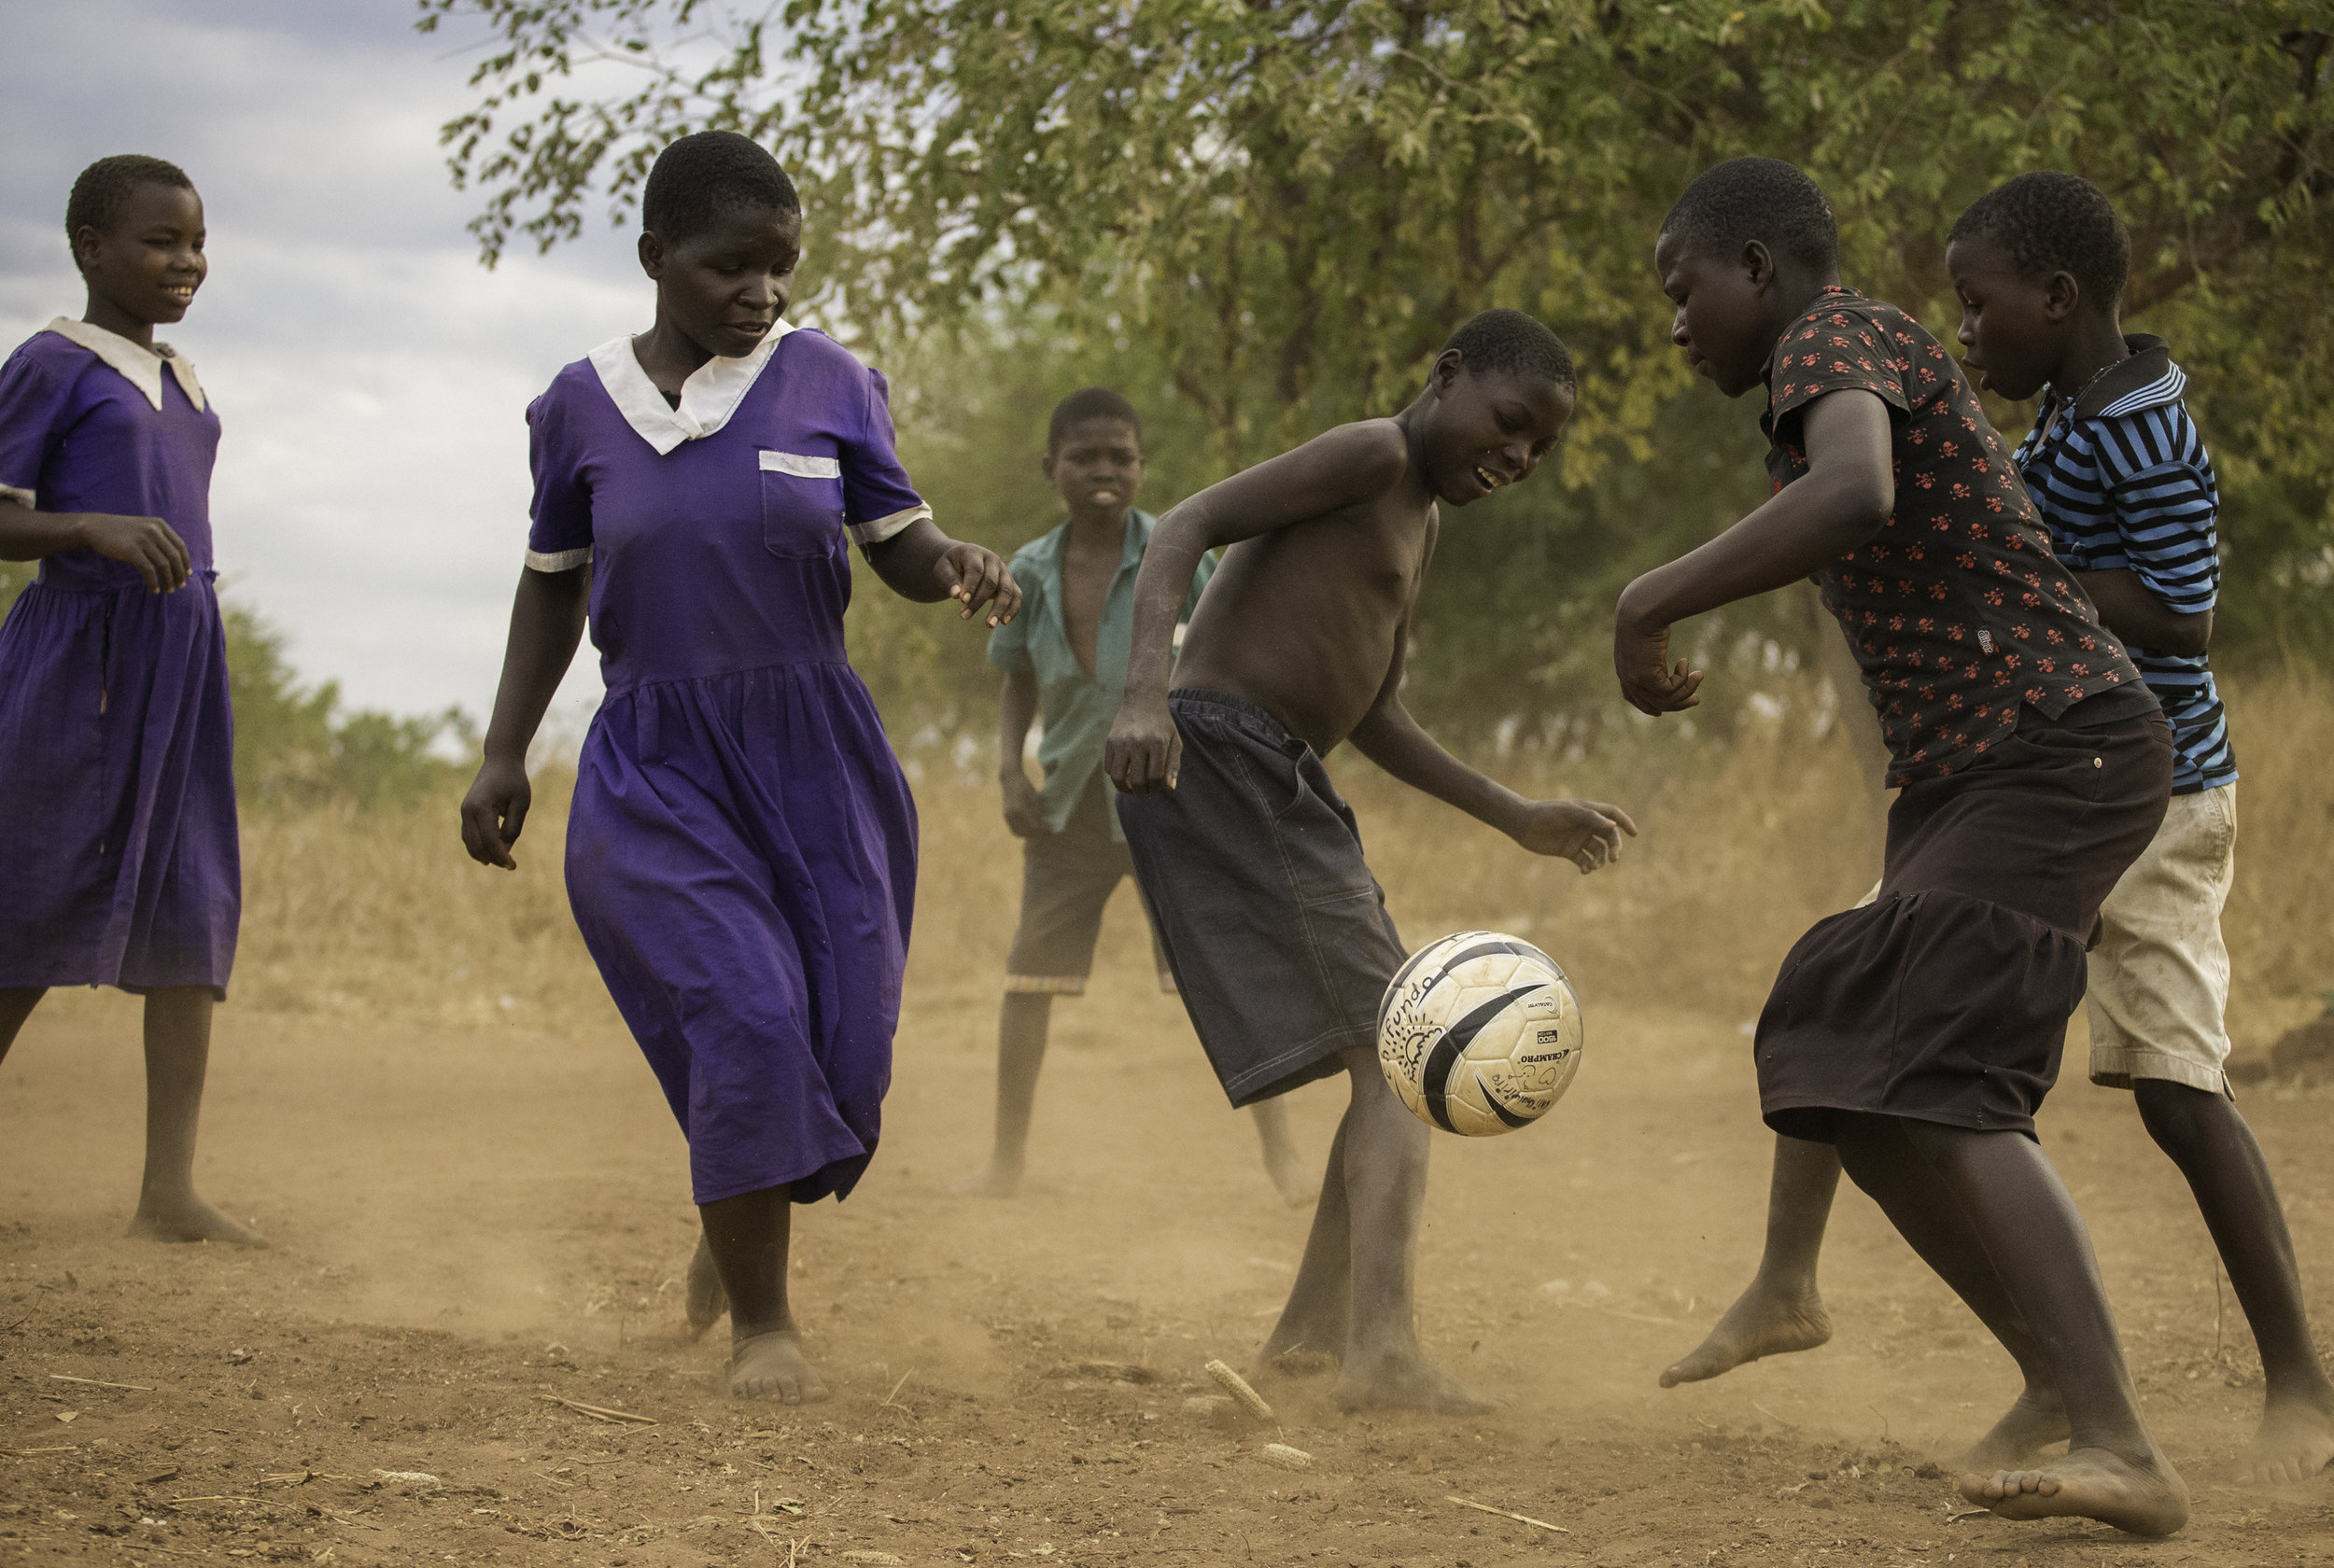 Malawi_soccer 1 (1 of 1).jpg